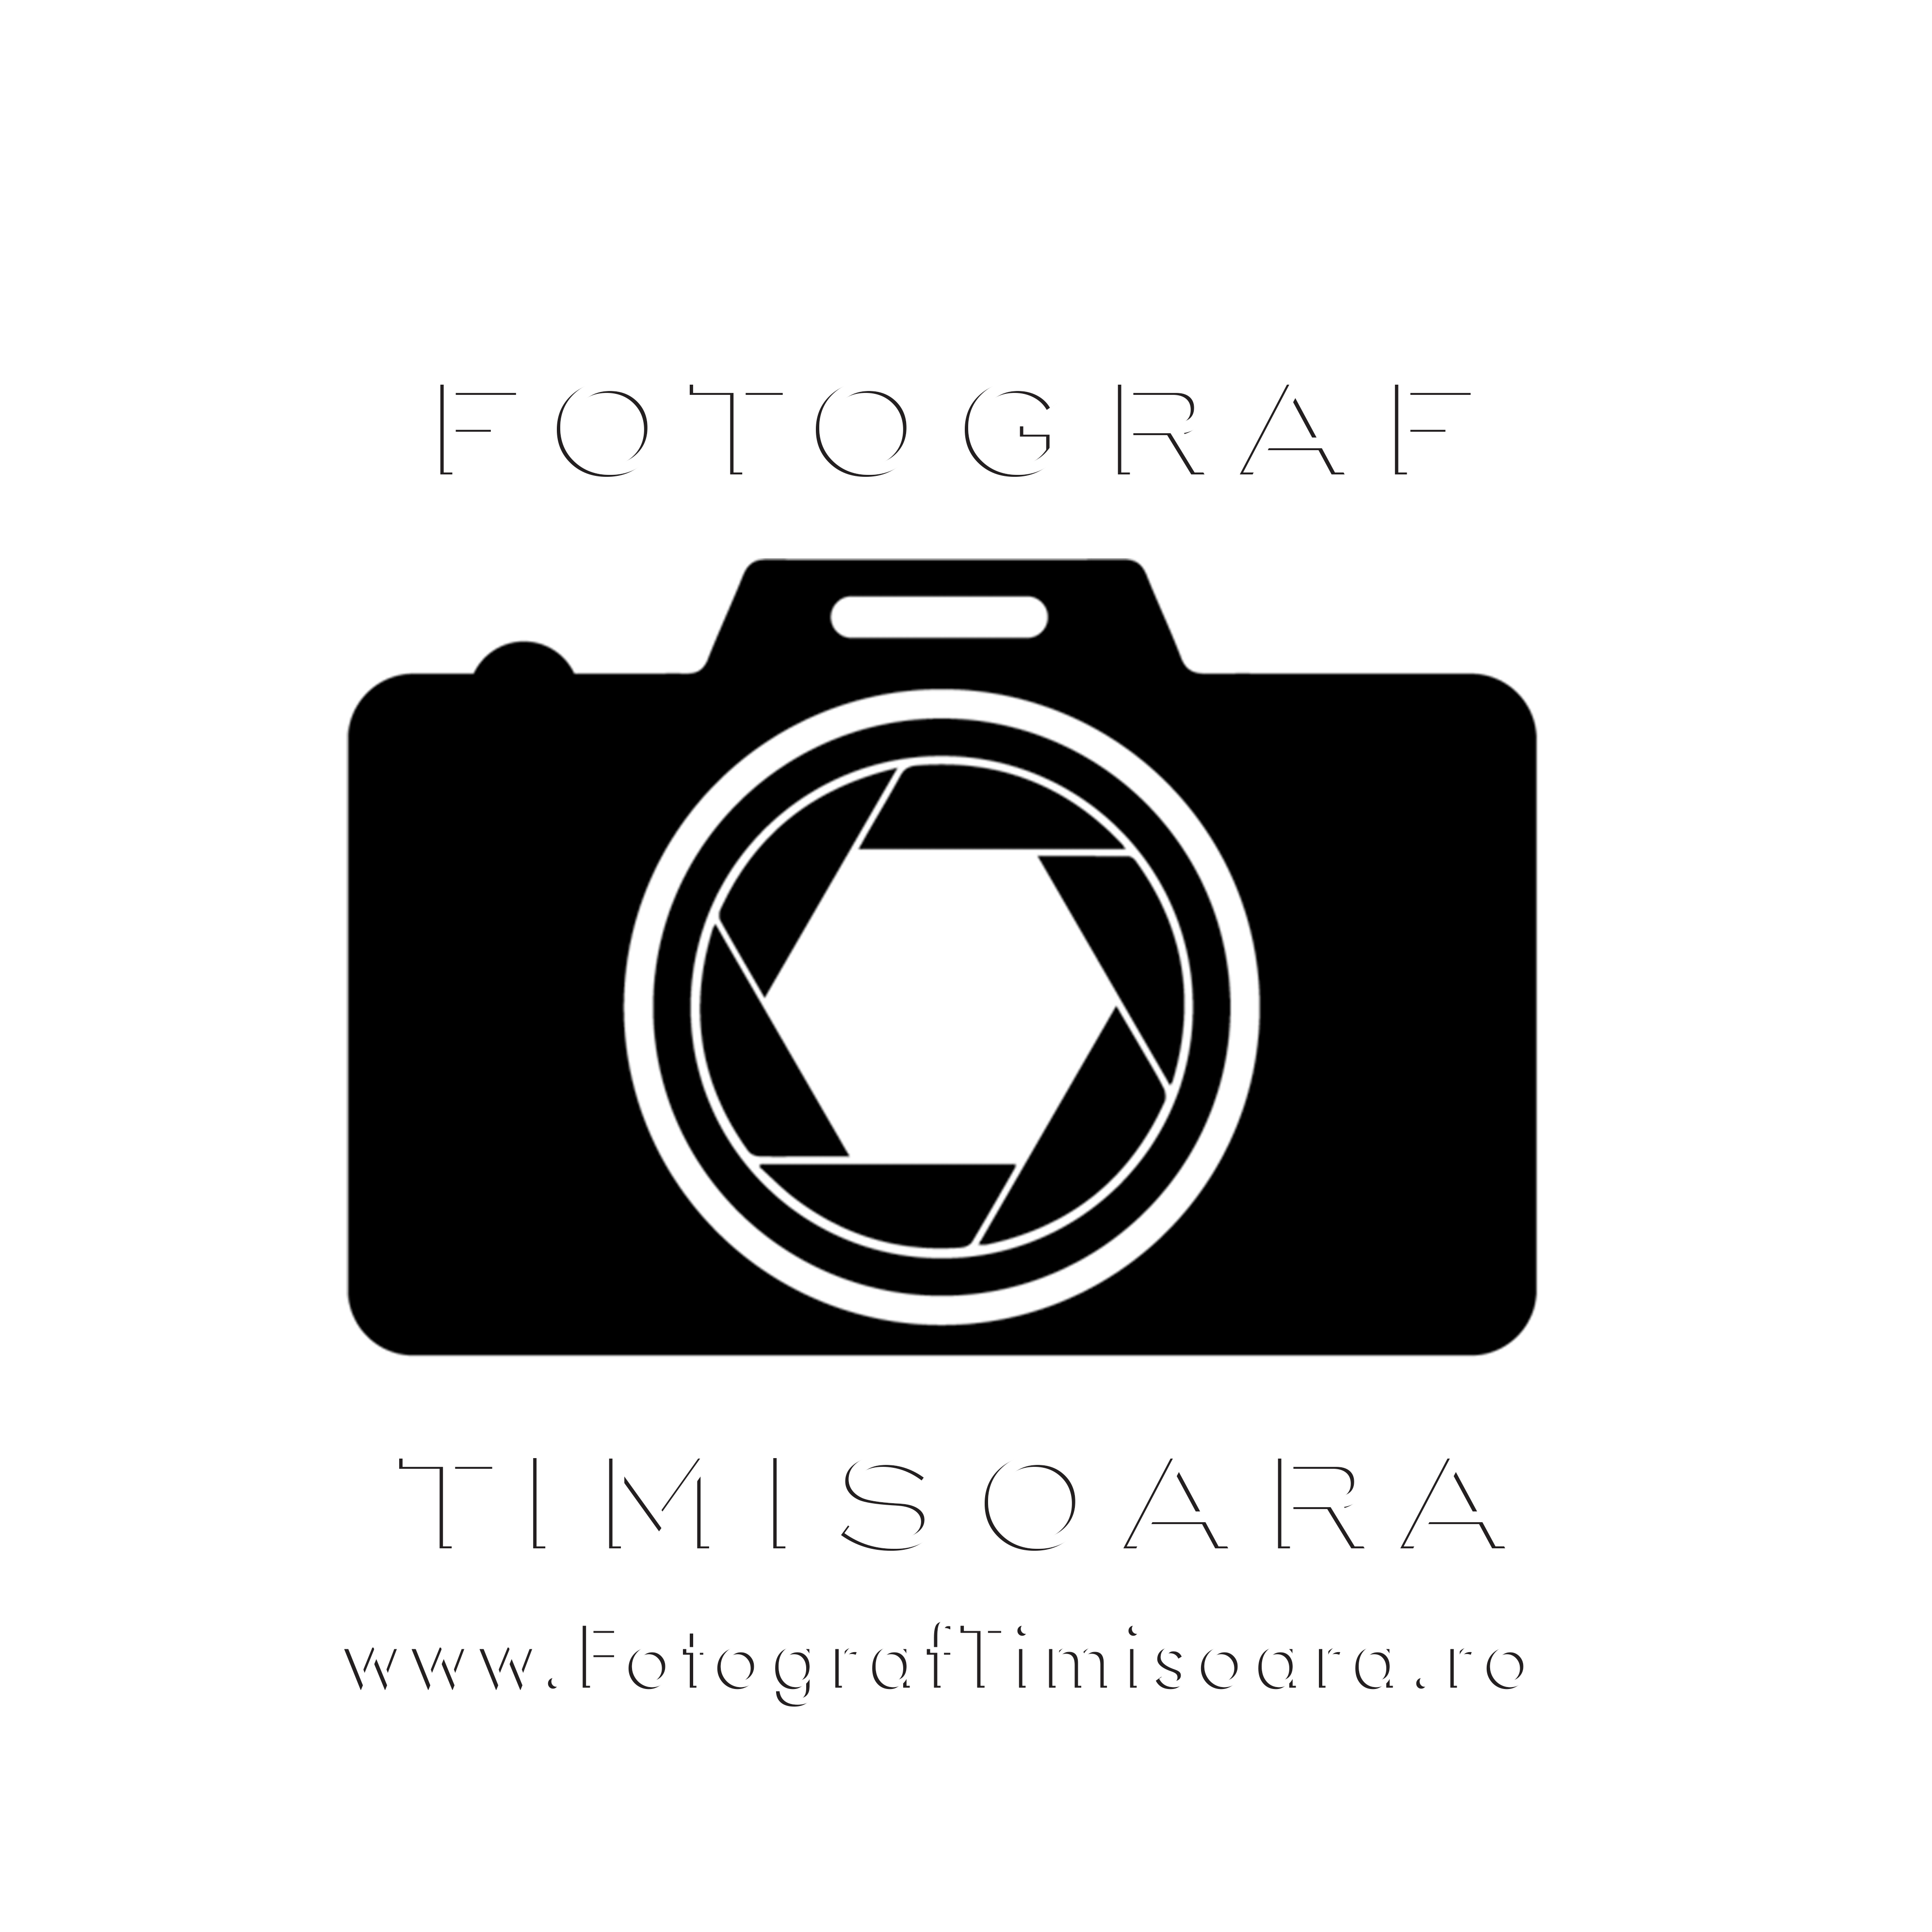 FOTOGRAF TIMISOARA